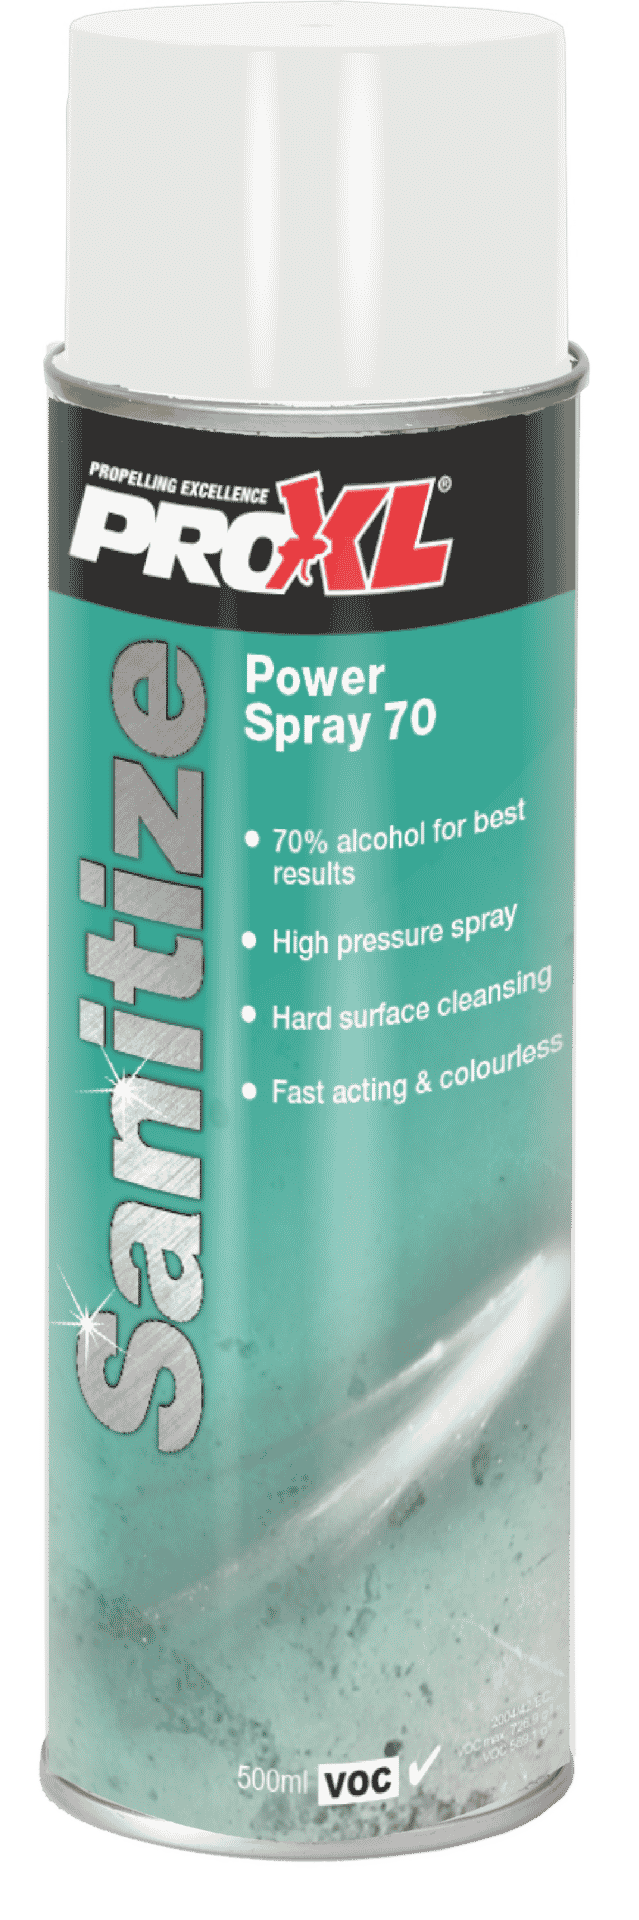 Power Spray 70 Aerosol (500ml) Product Image